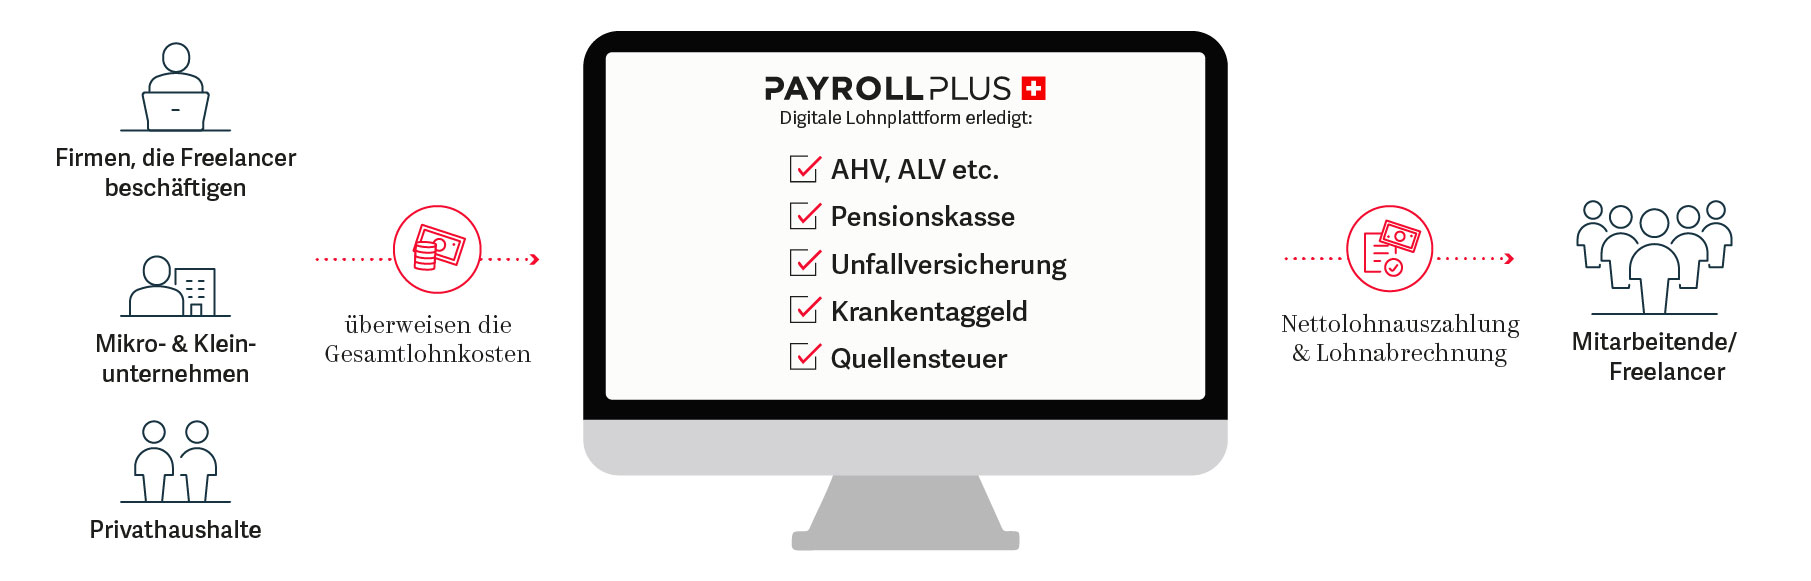 PayrollPlus_Grafik2_web.jpg